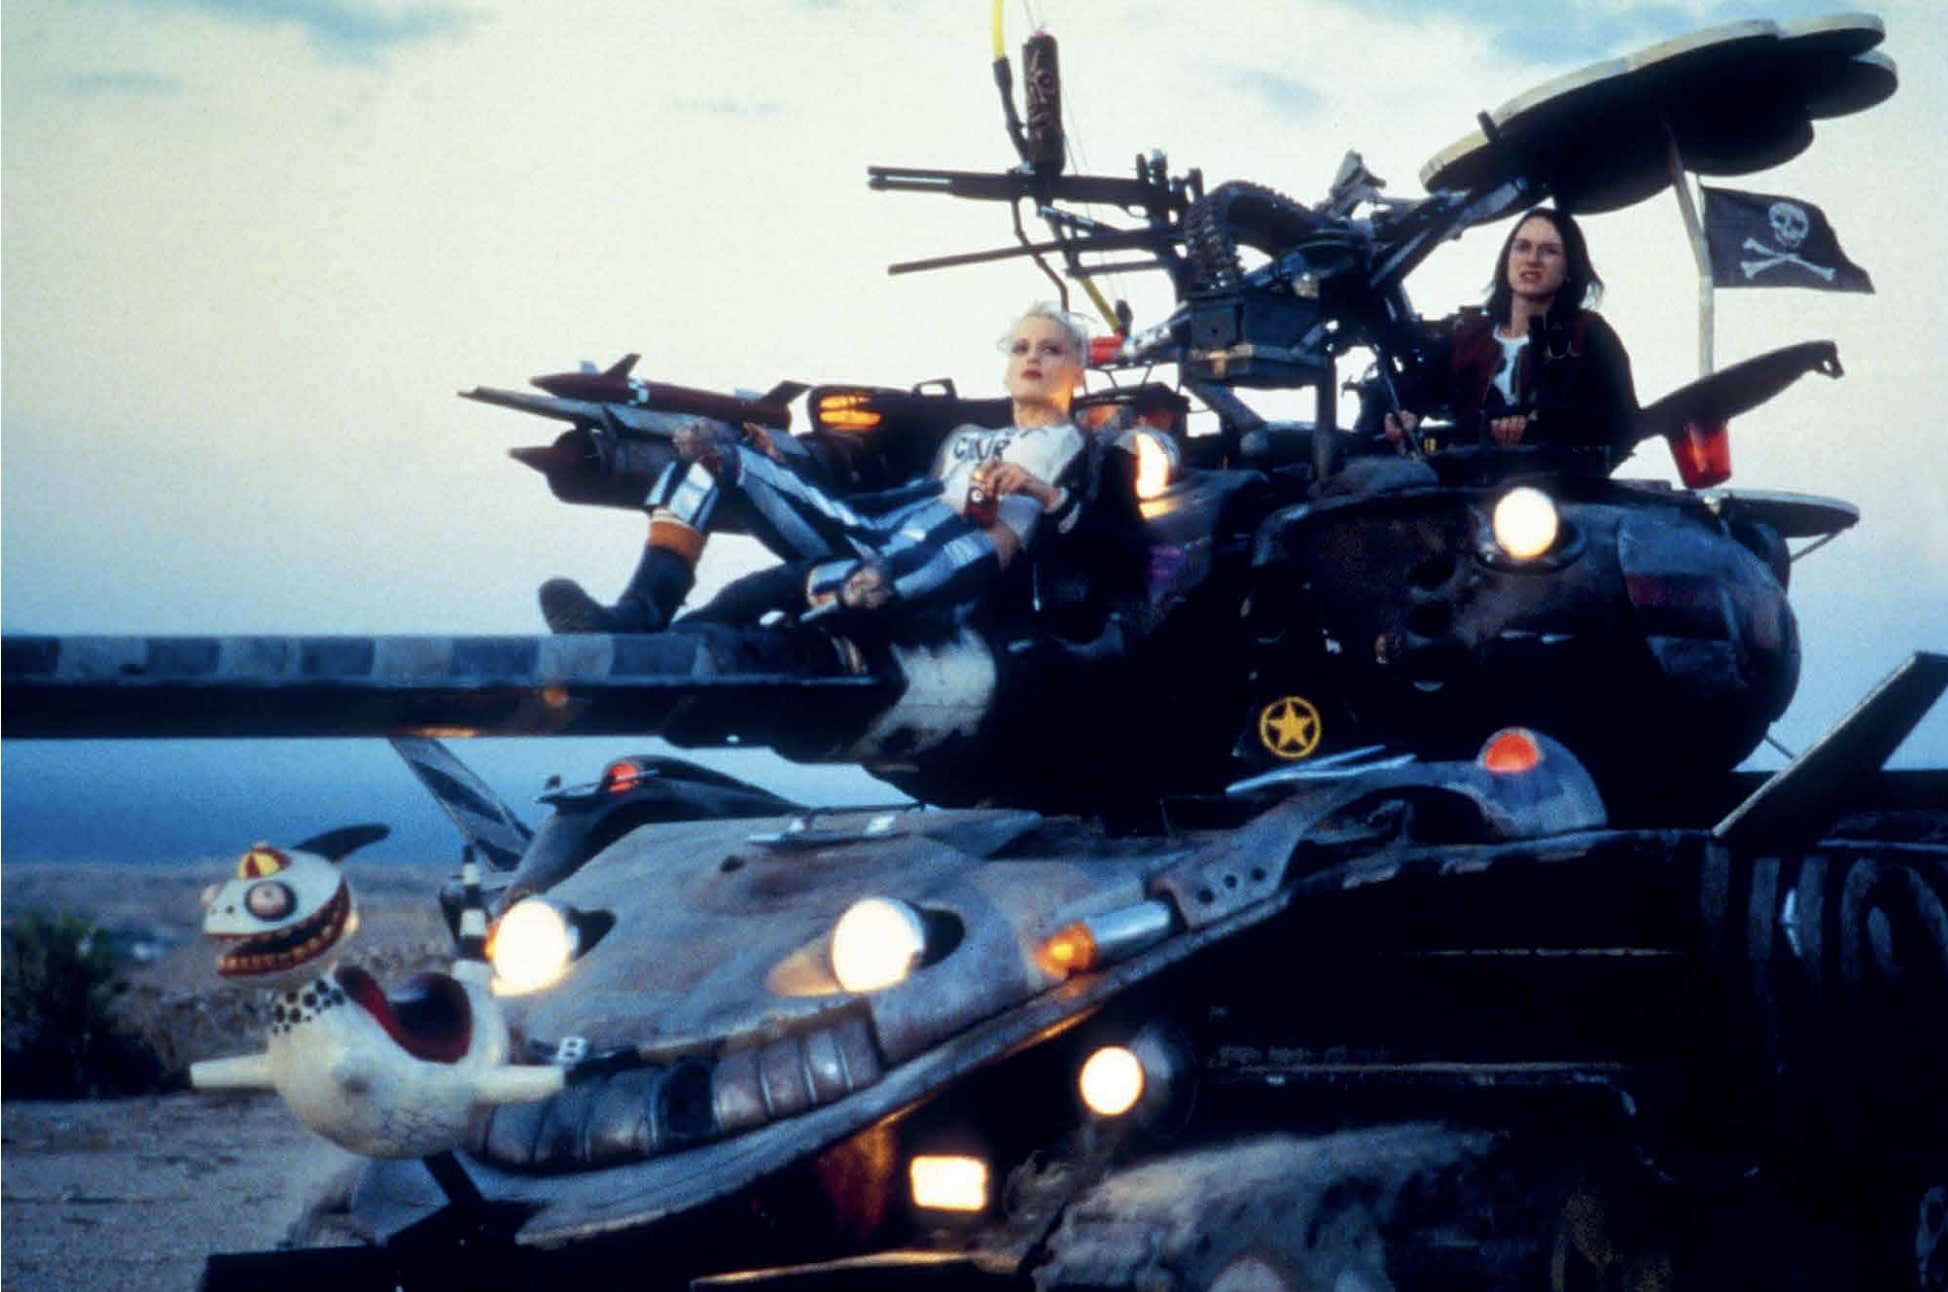 Tank Girl (1995), rendezte: Rachel Talalay, © Photo 12 / Alamy Stock Photo